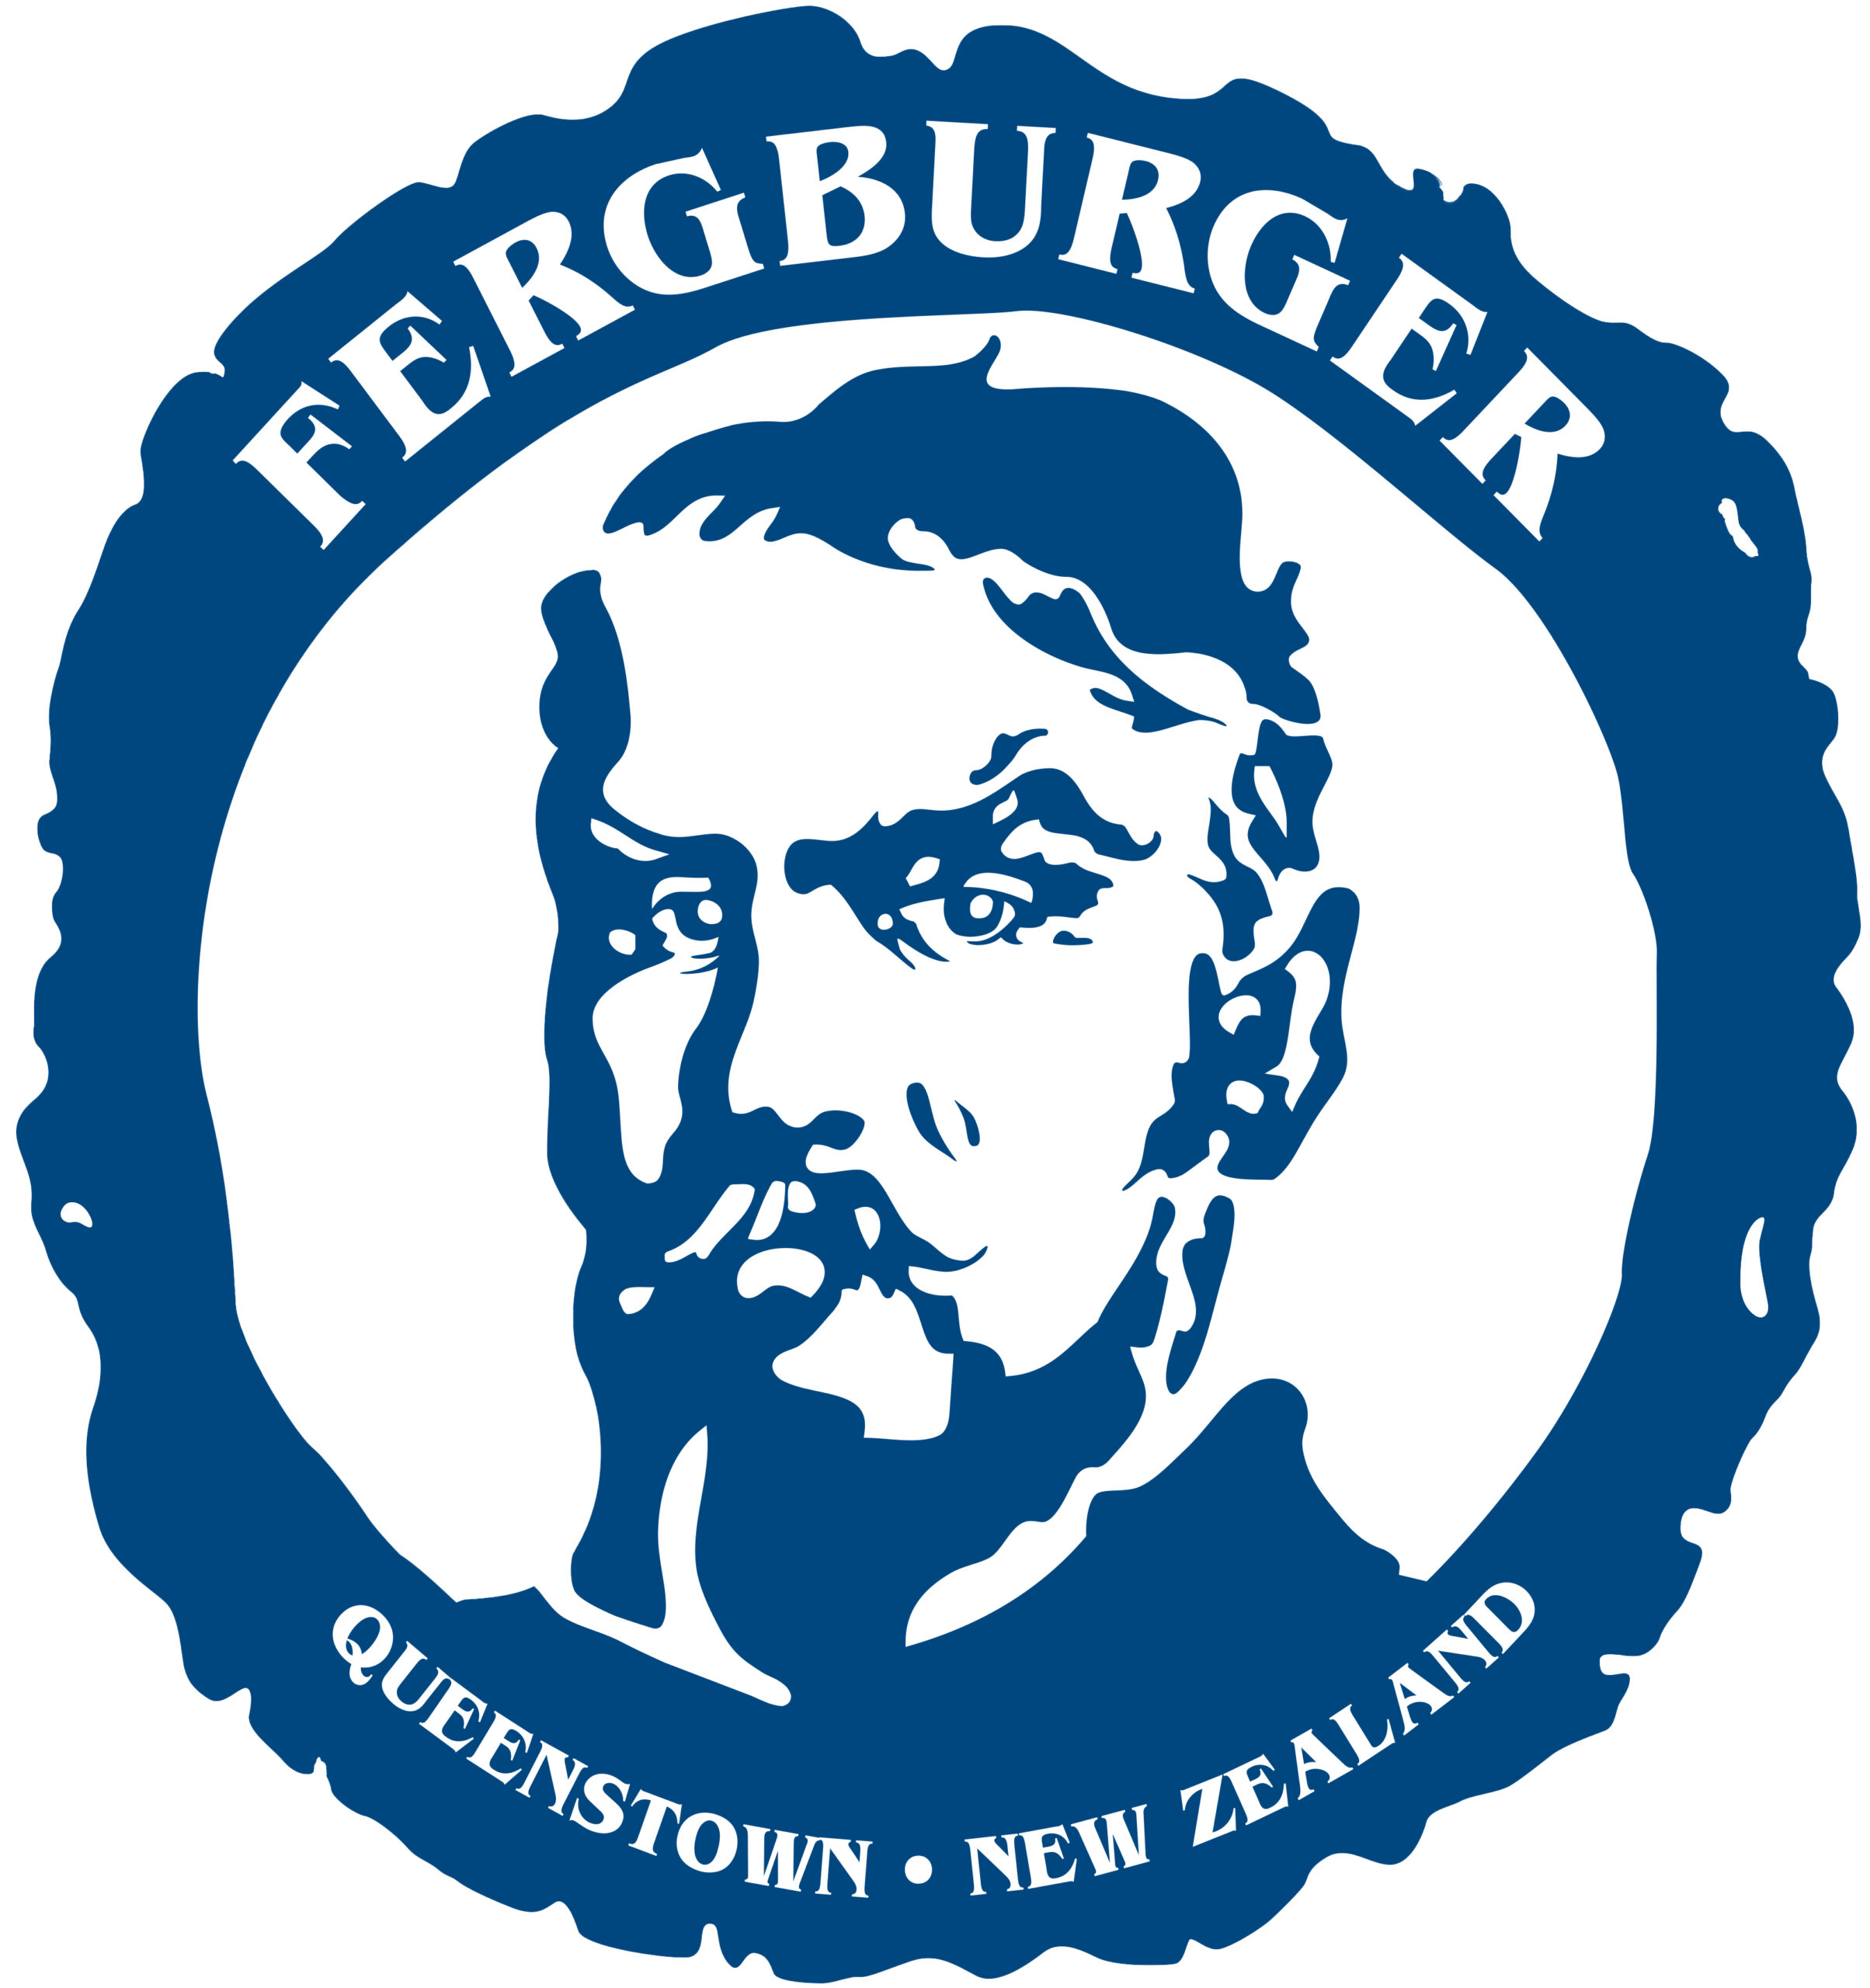 Fergburger